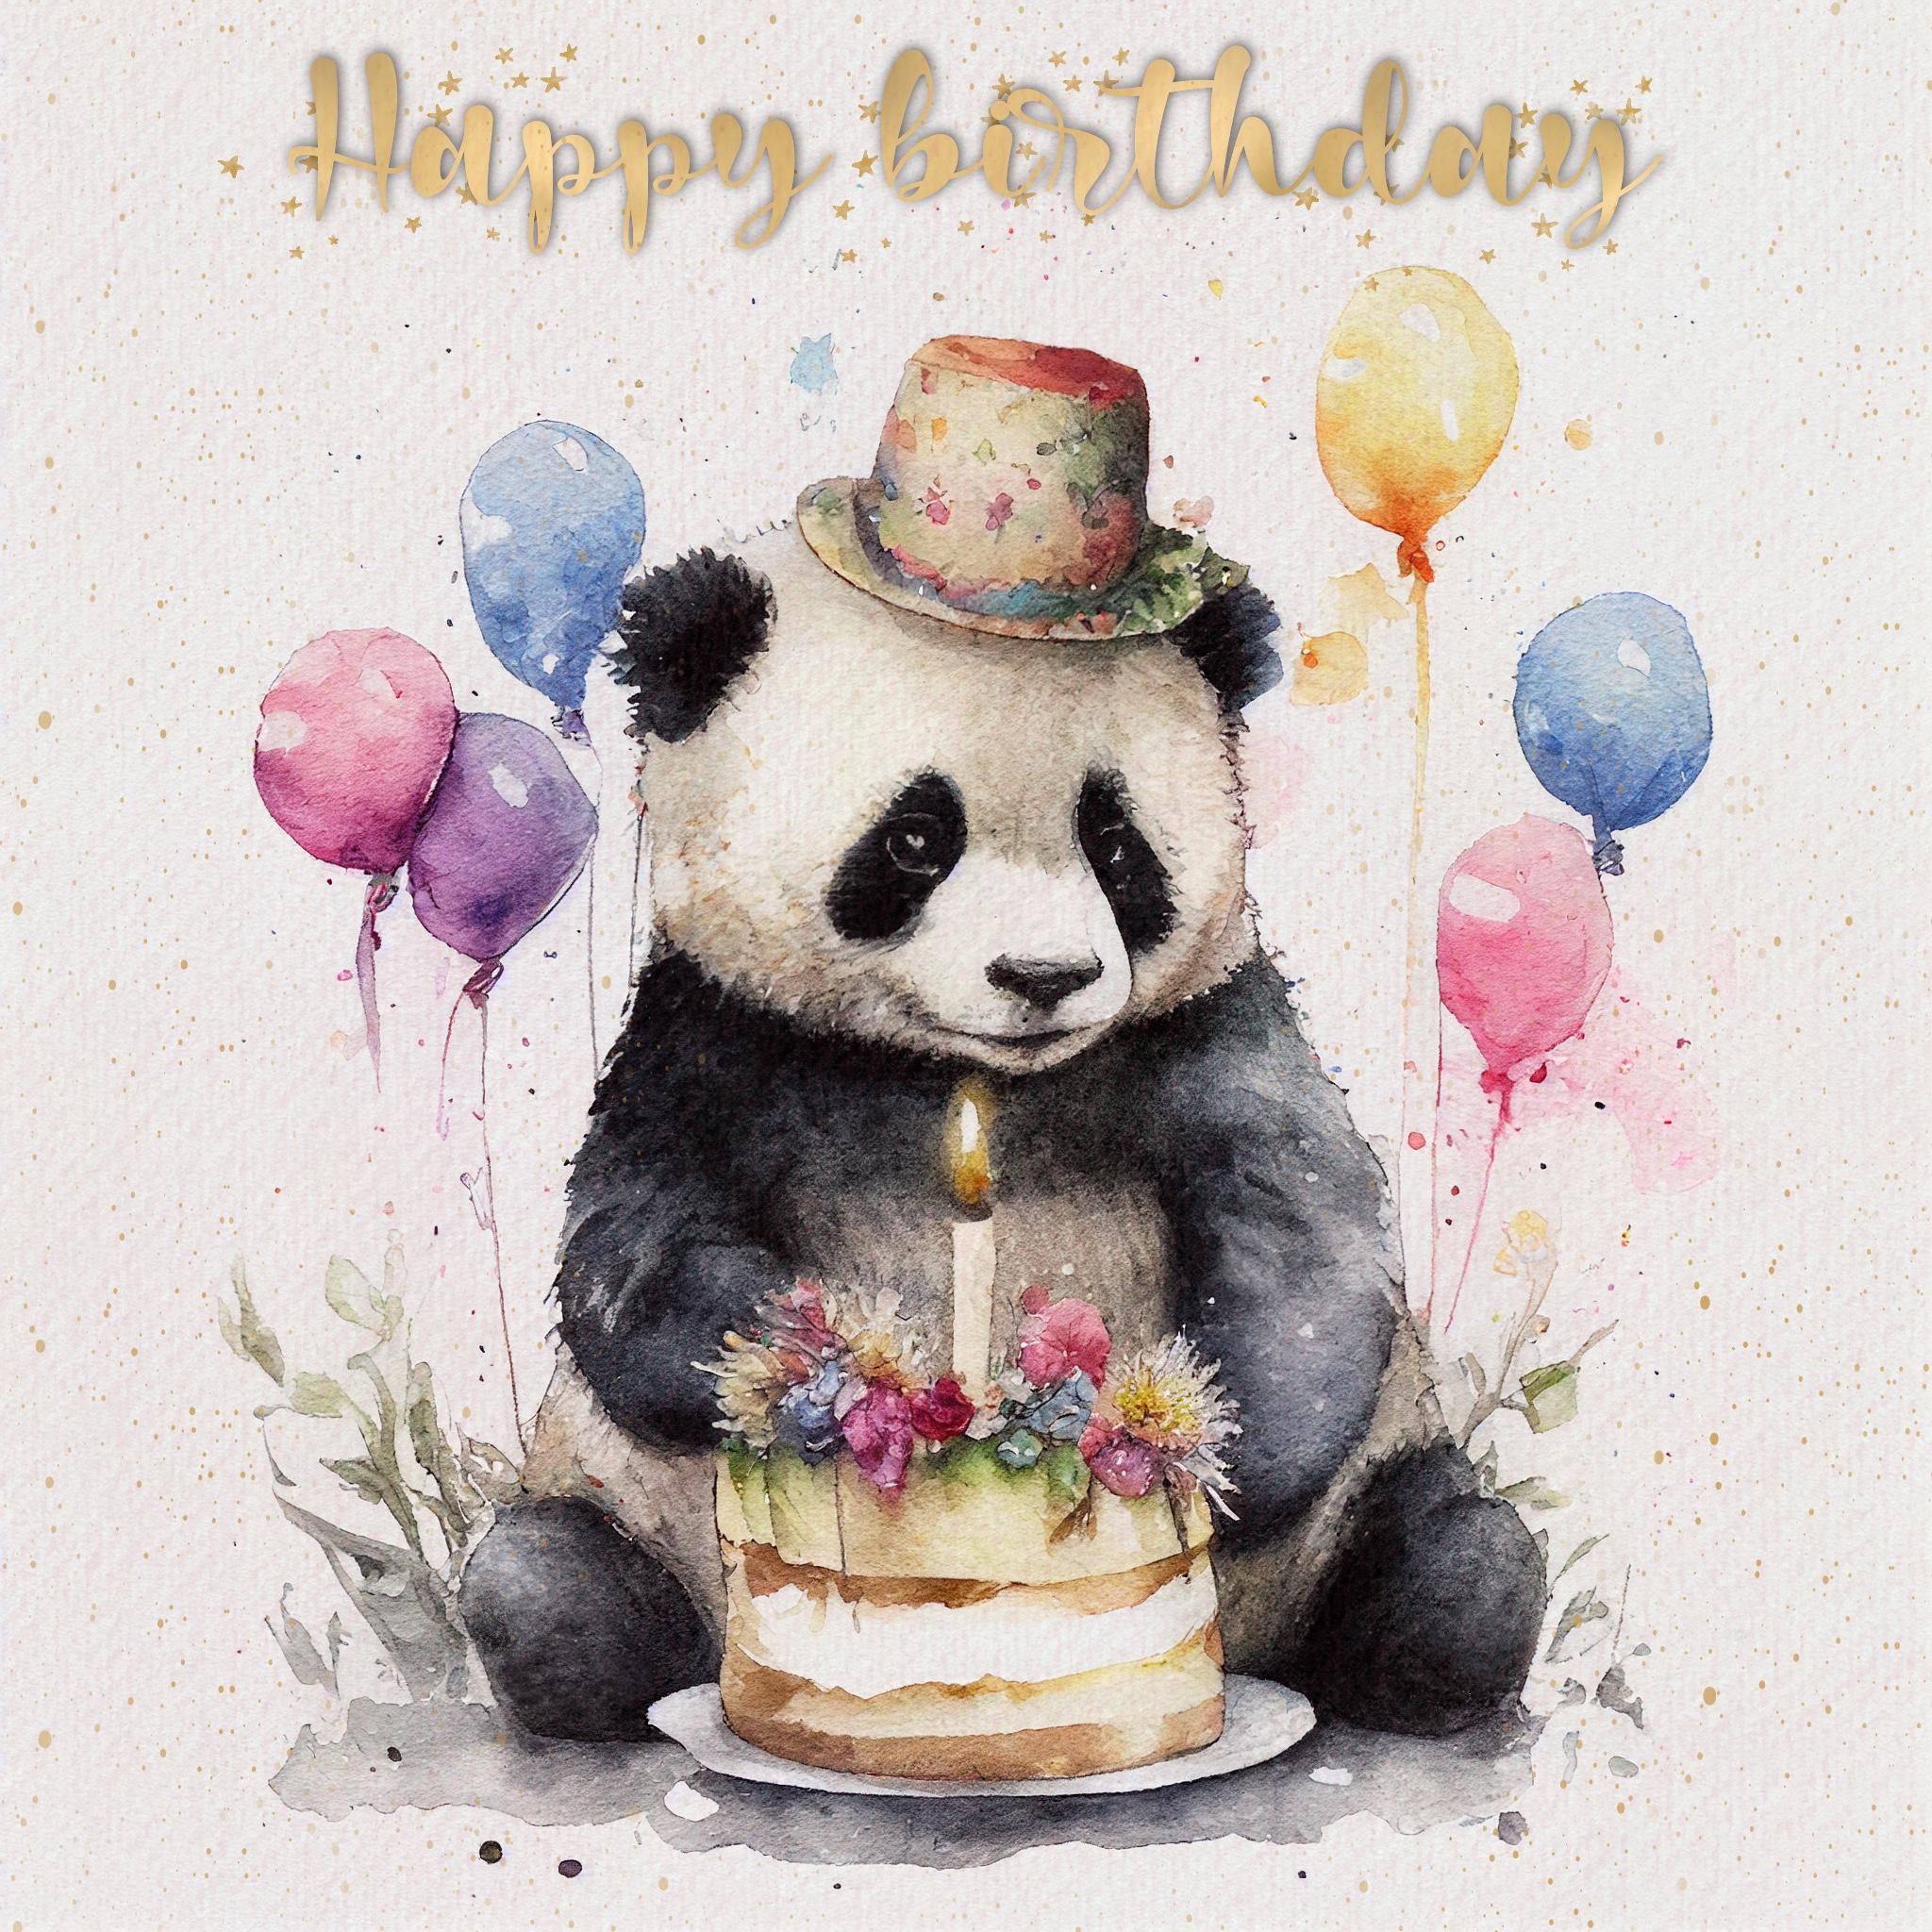 Pandas birthday with cake and candls NFT cruzo